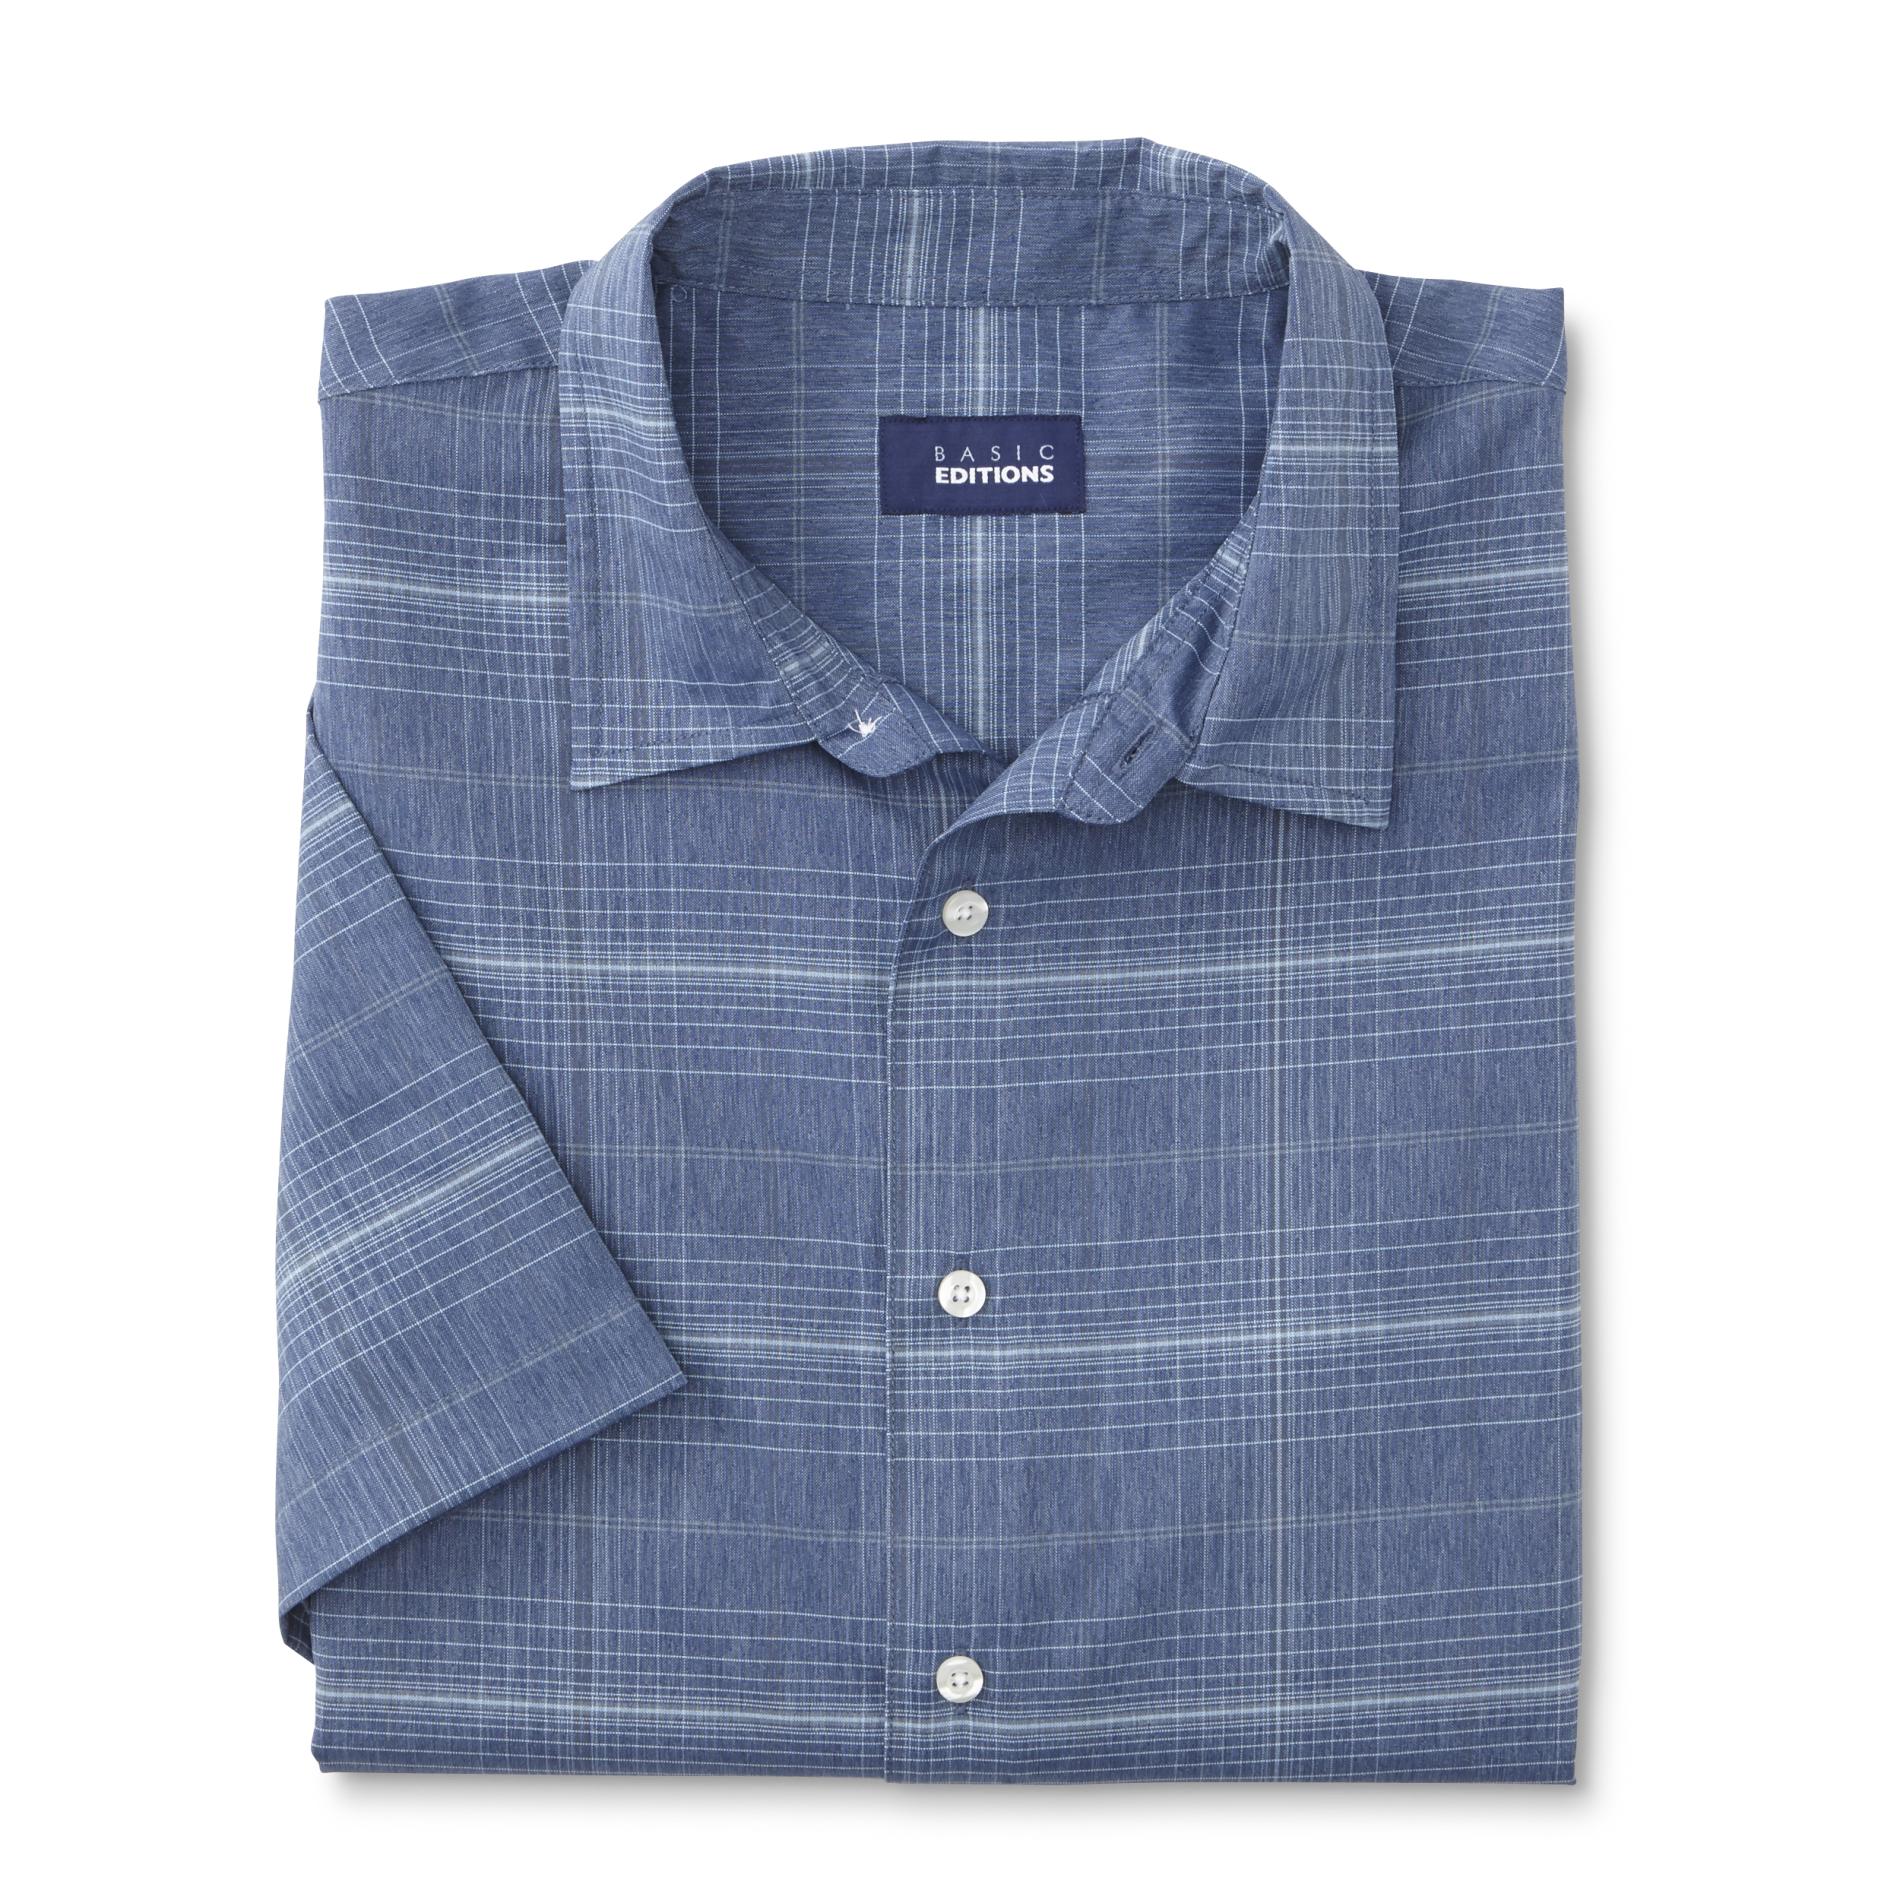 Basic Editions Men's Big & Tall Short-Sleeve Microfiber Shirt - Grid